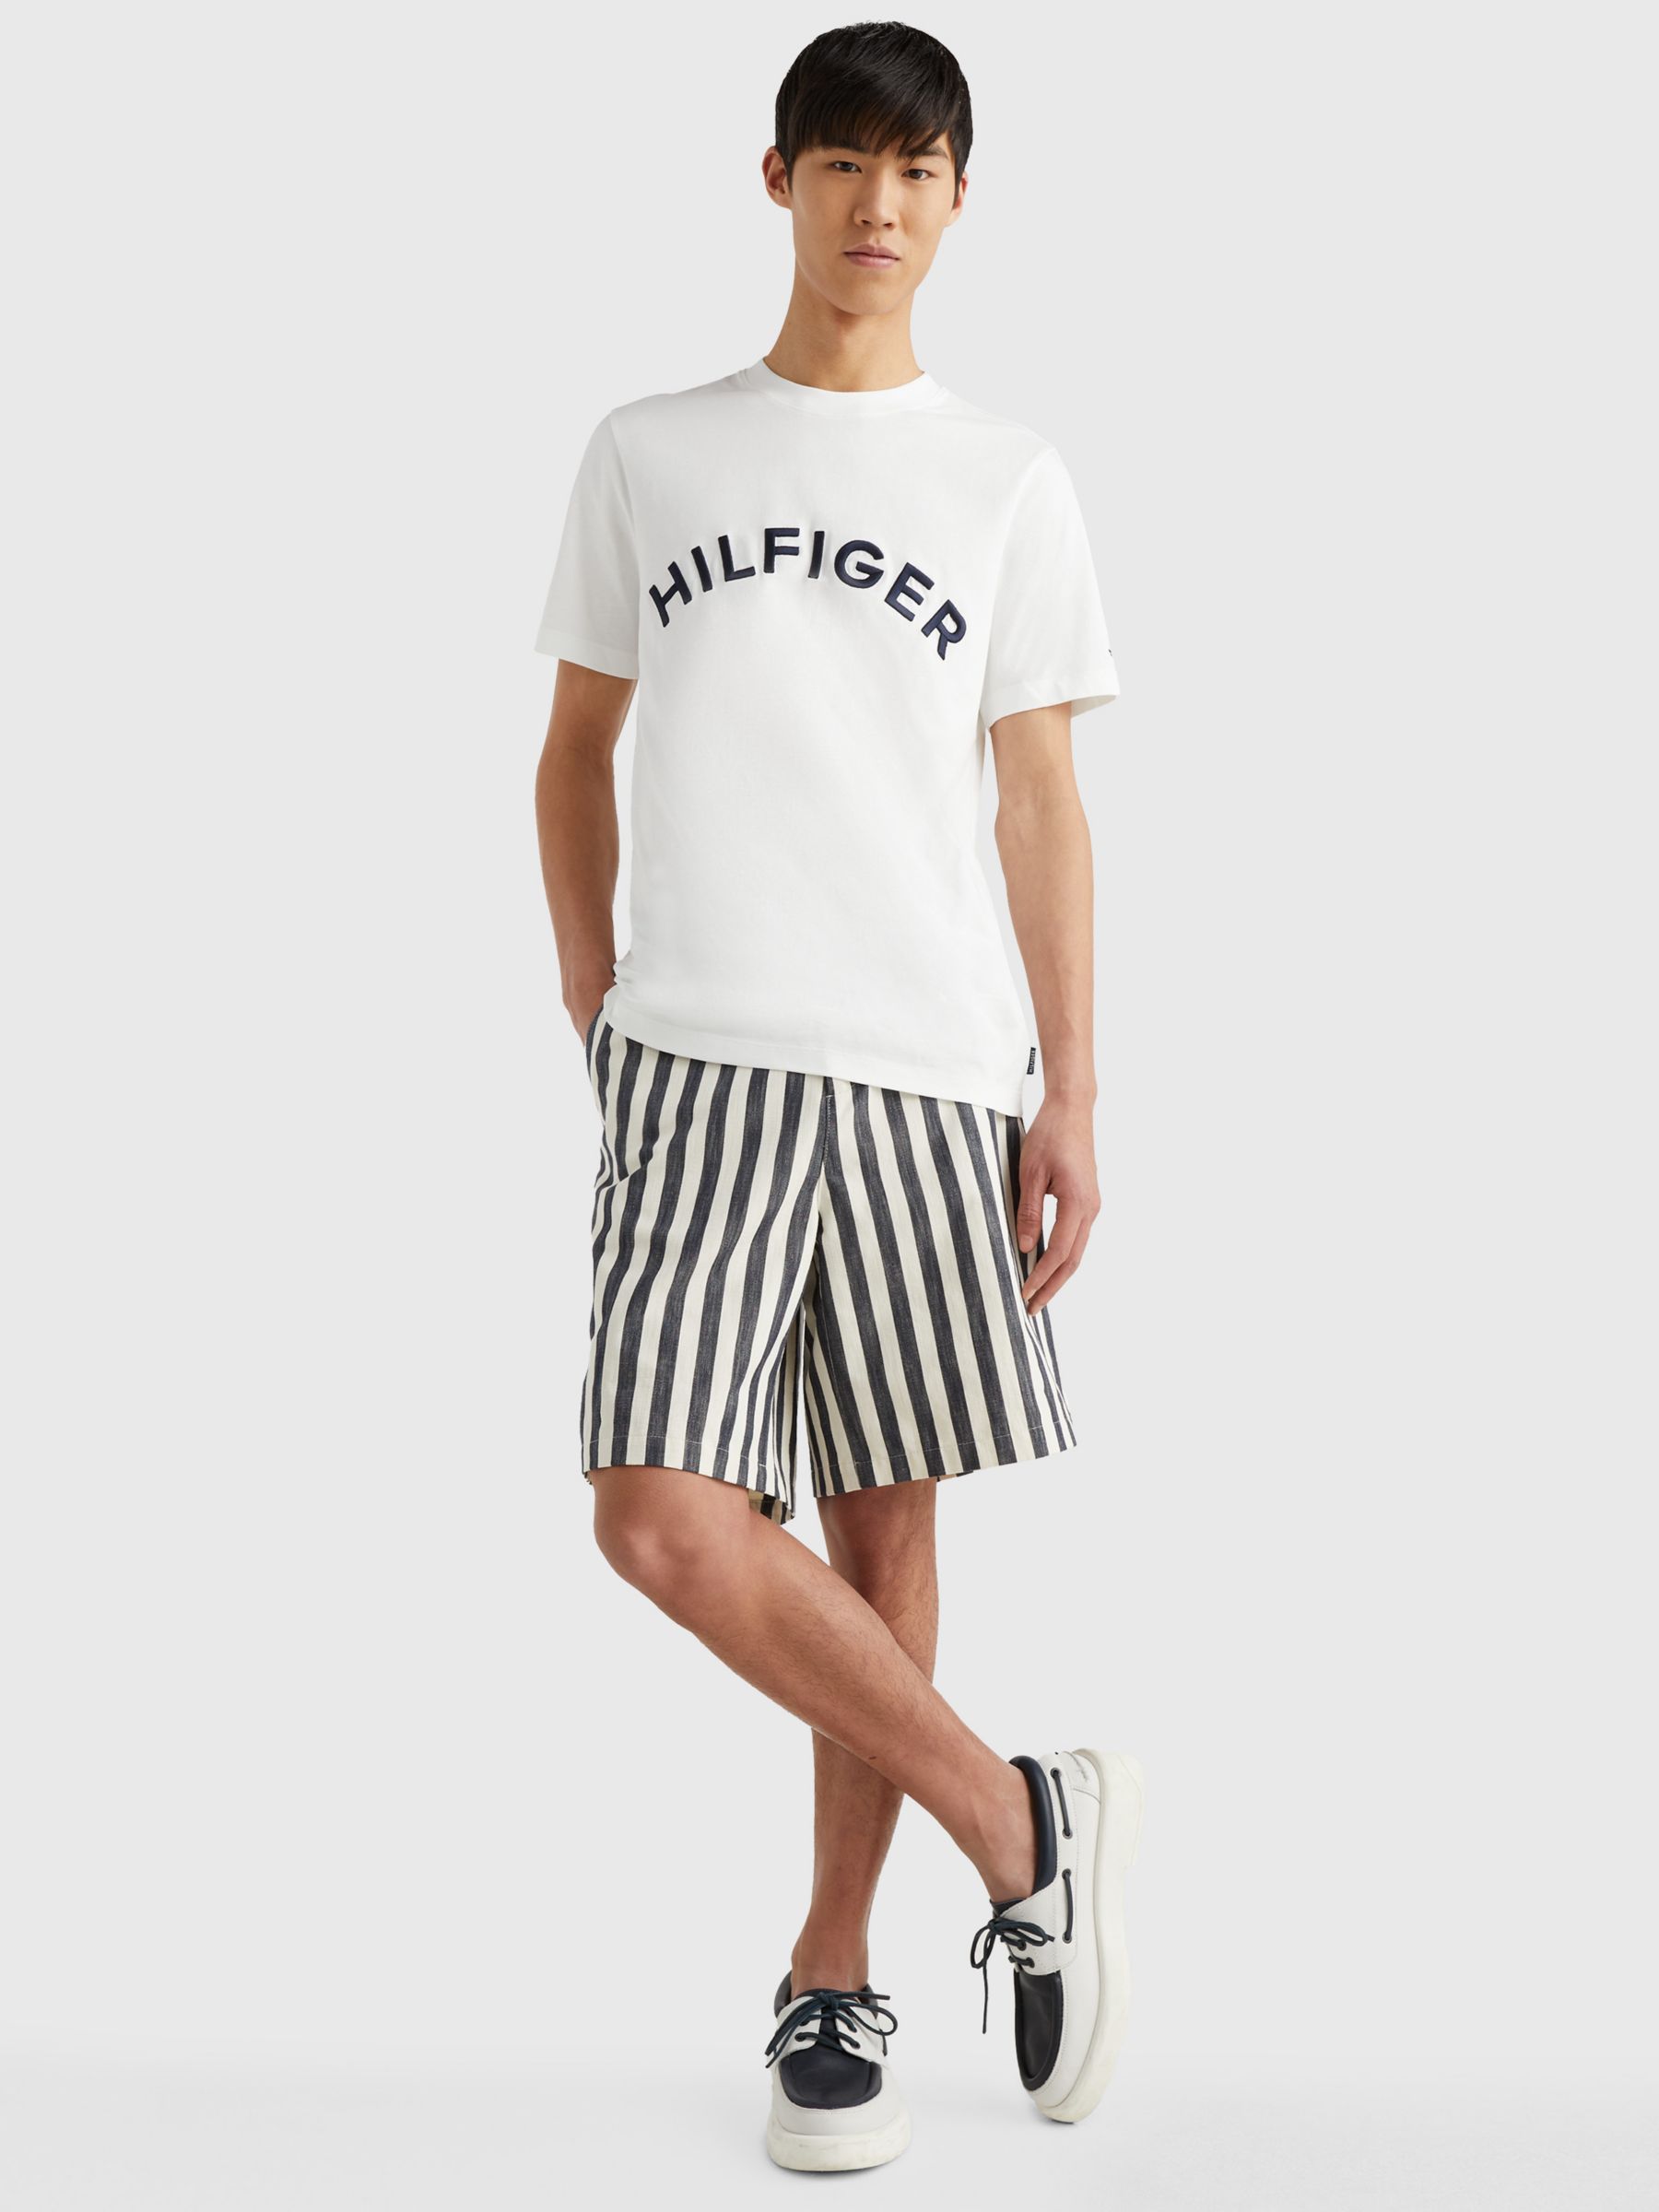 Tommy Hilfiger Men's T-shirt, White, S